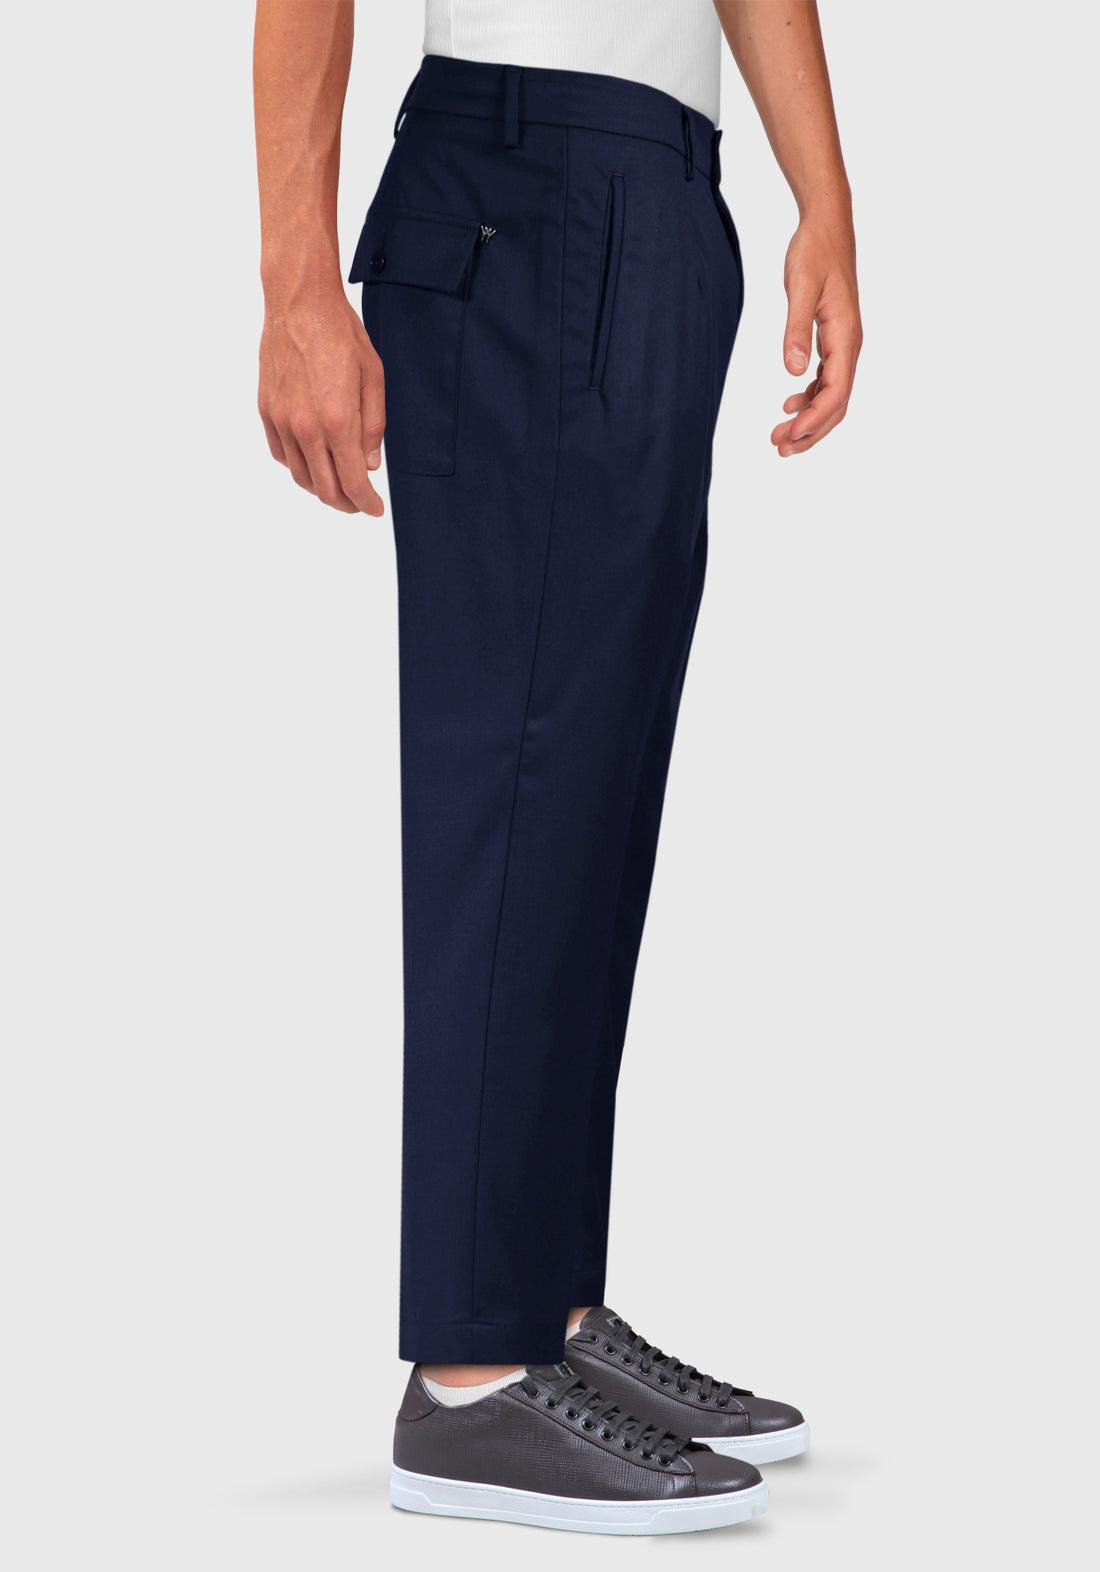 Pantalone Fresco Lana con Tasconi dietro - Blue